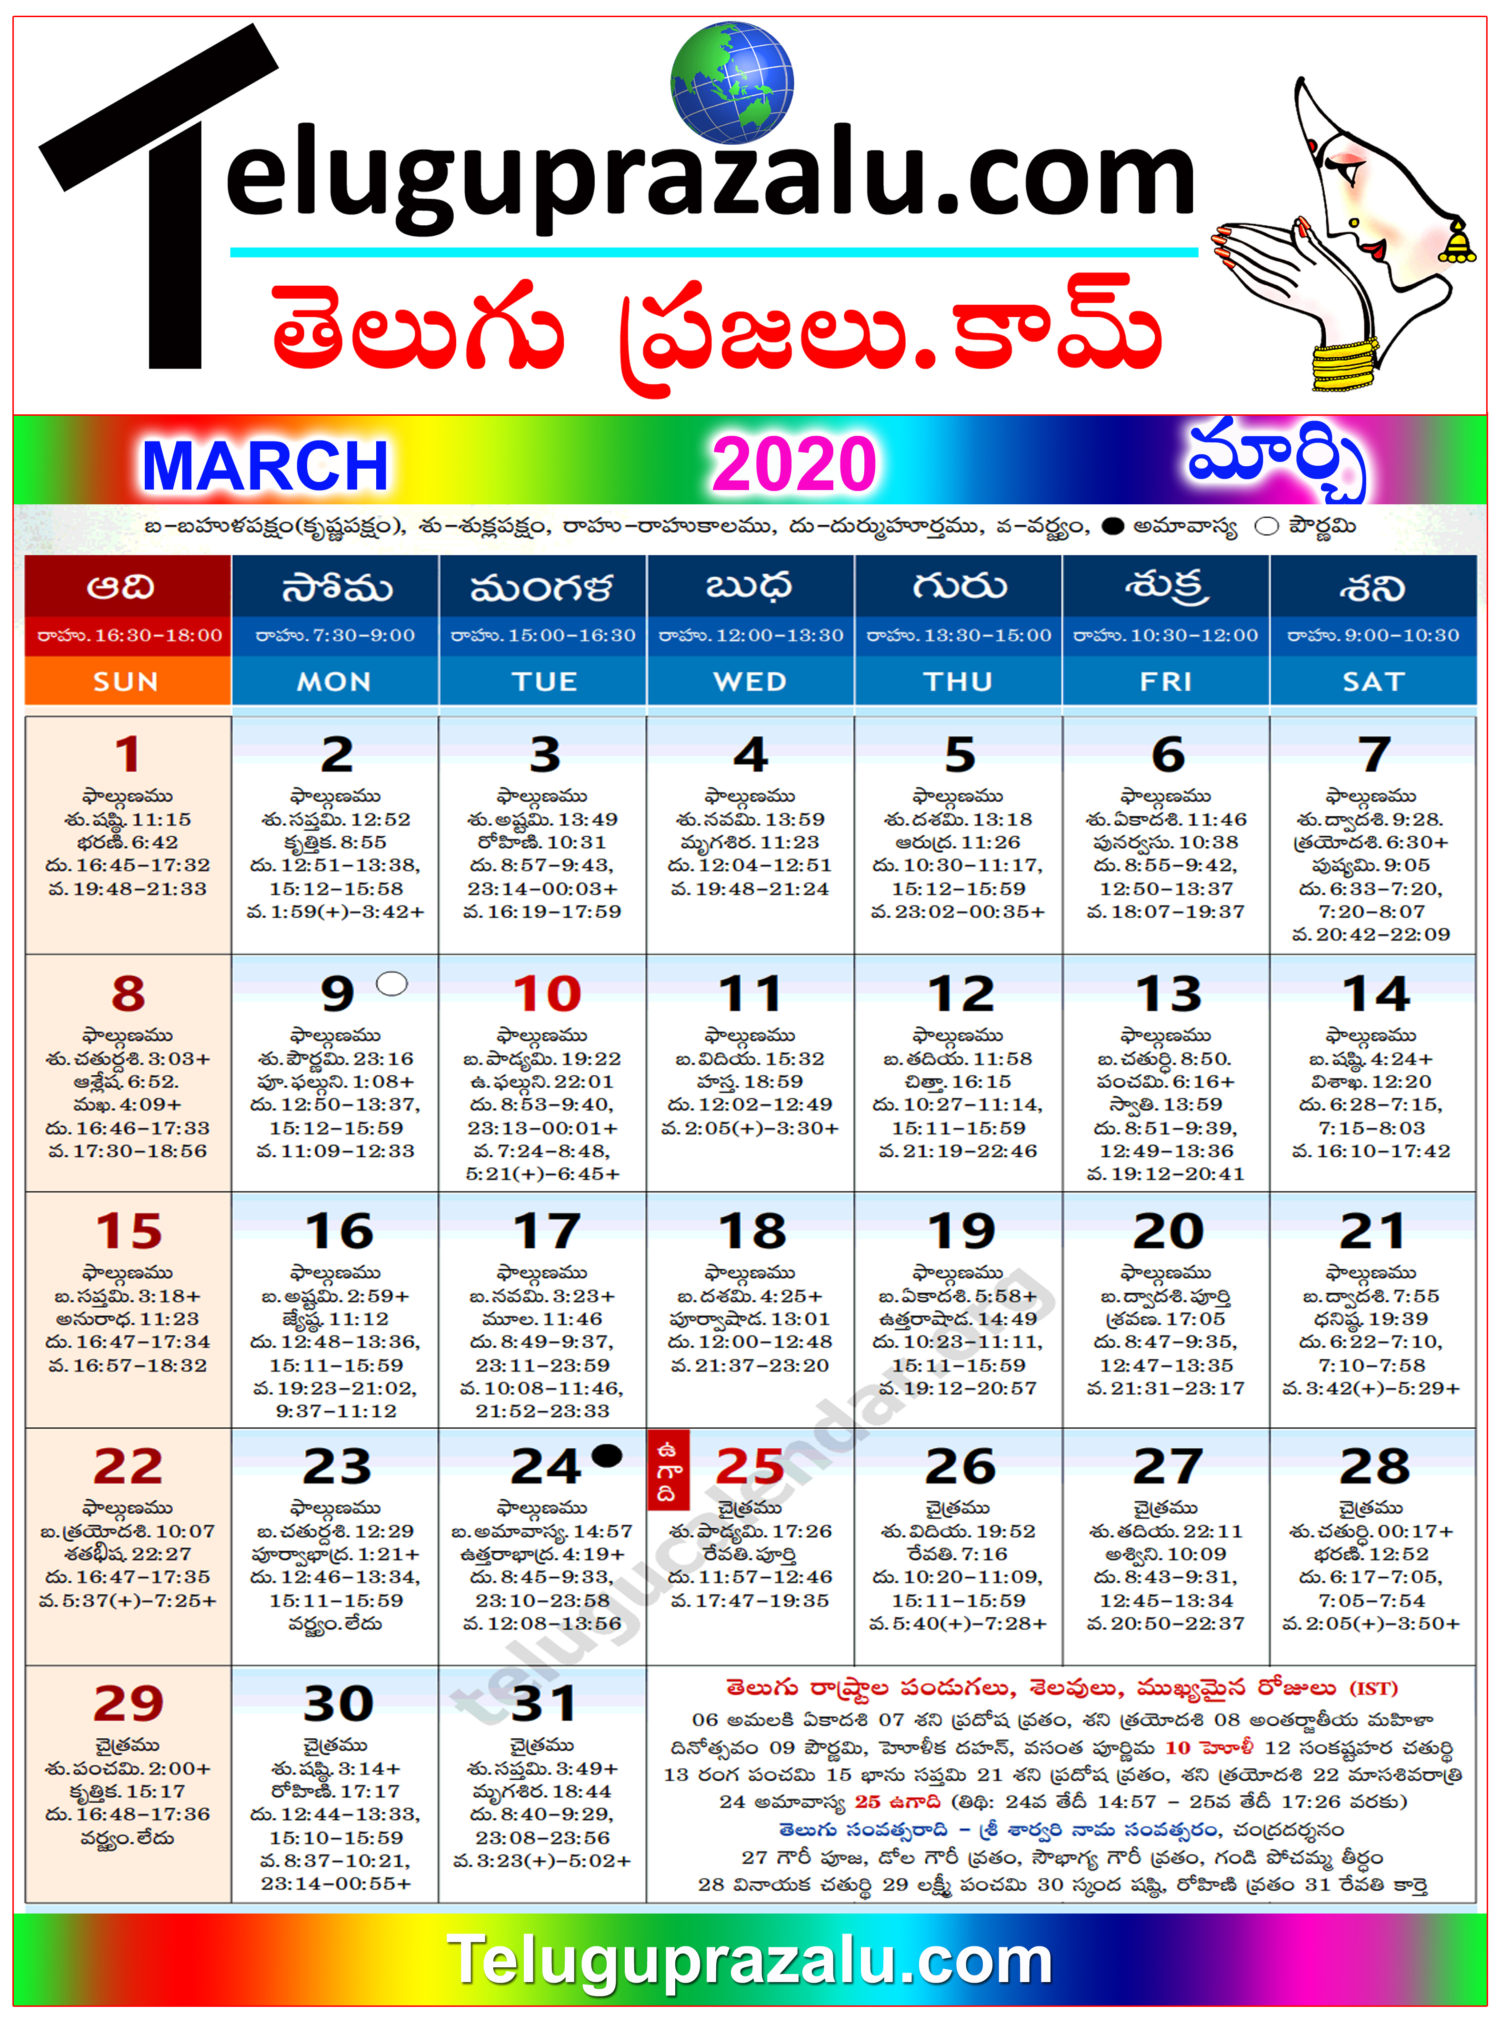 Telugu Calendar 2020 March Telugu News, Movies and More